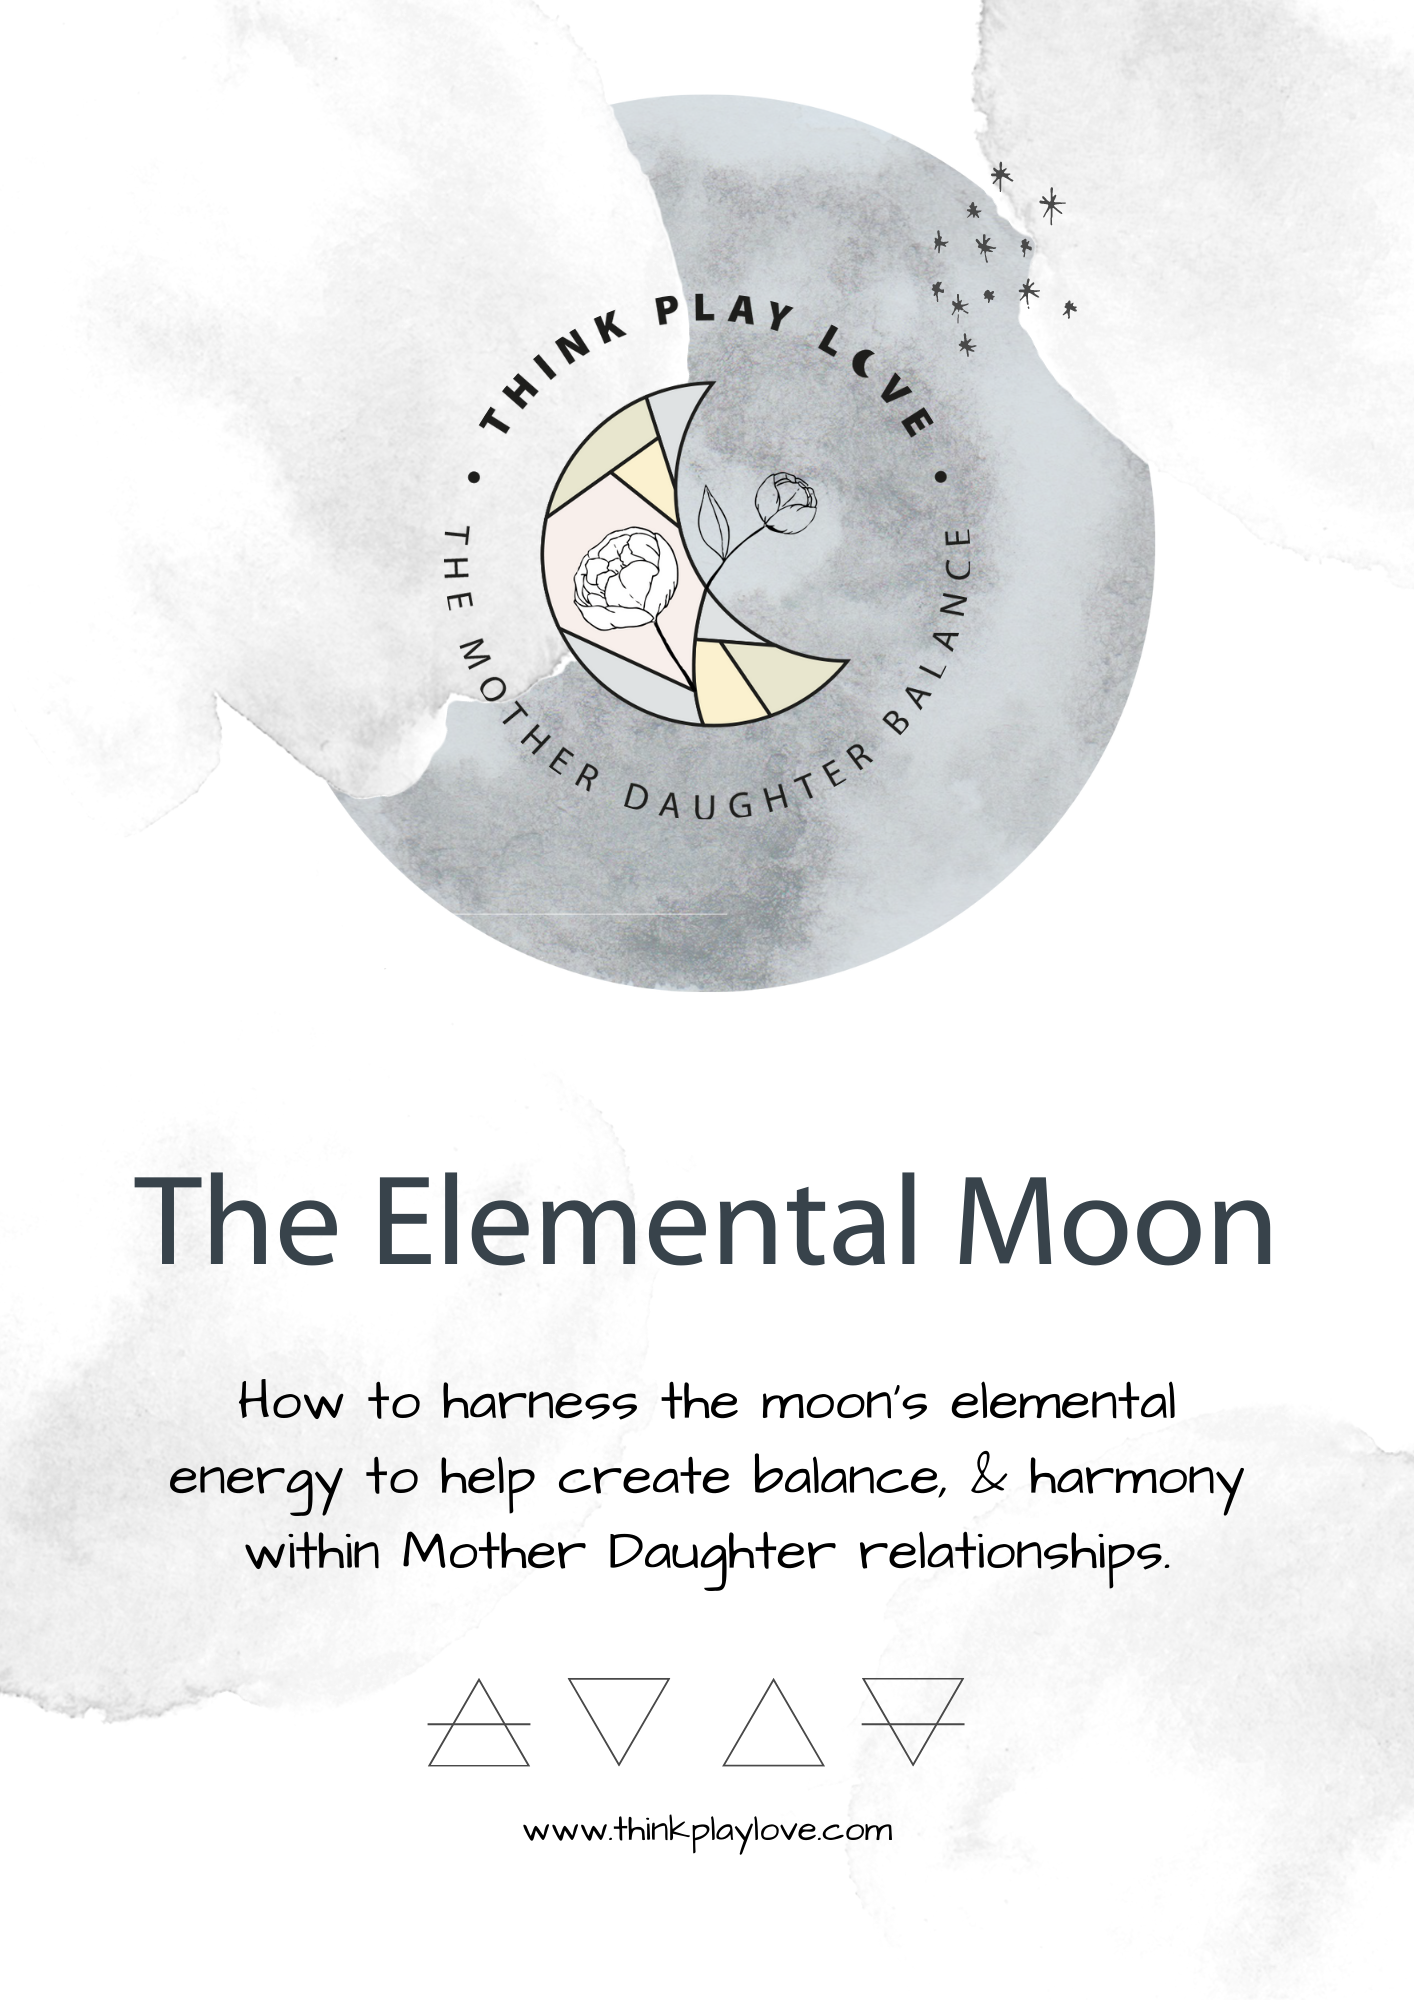 The Elemental Moon